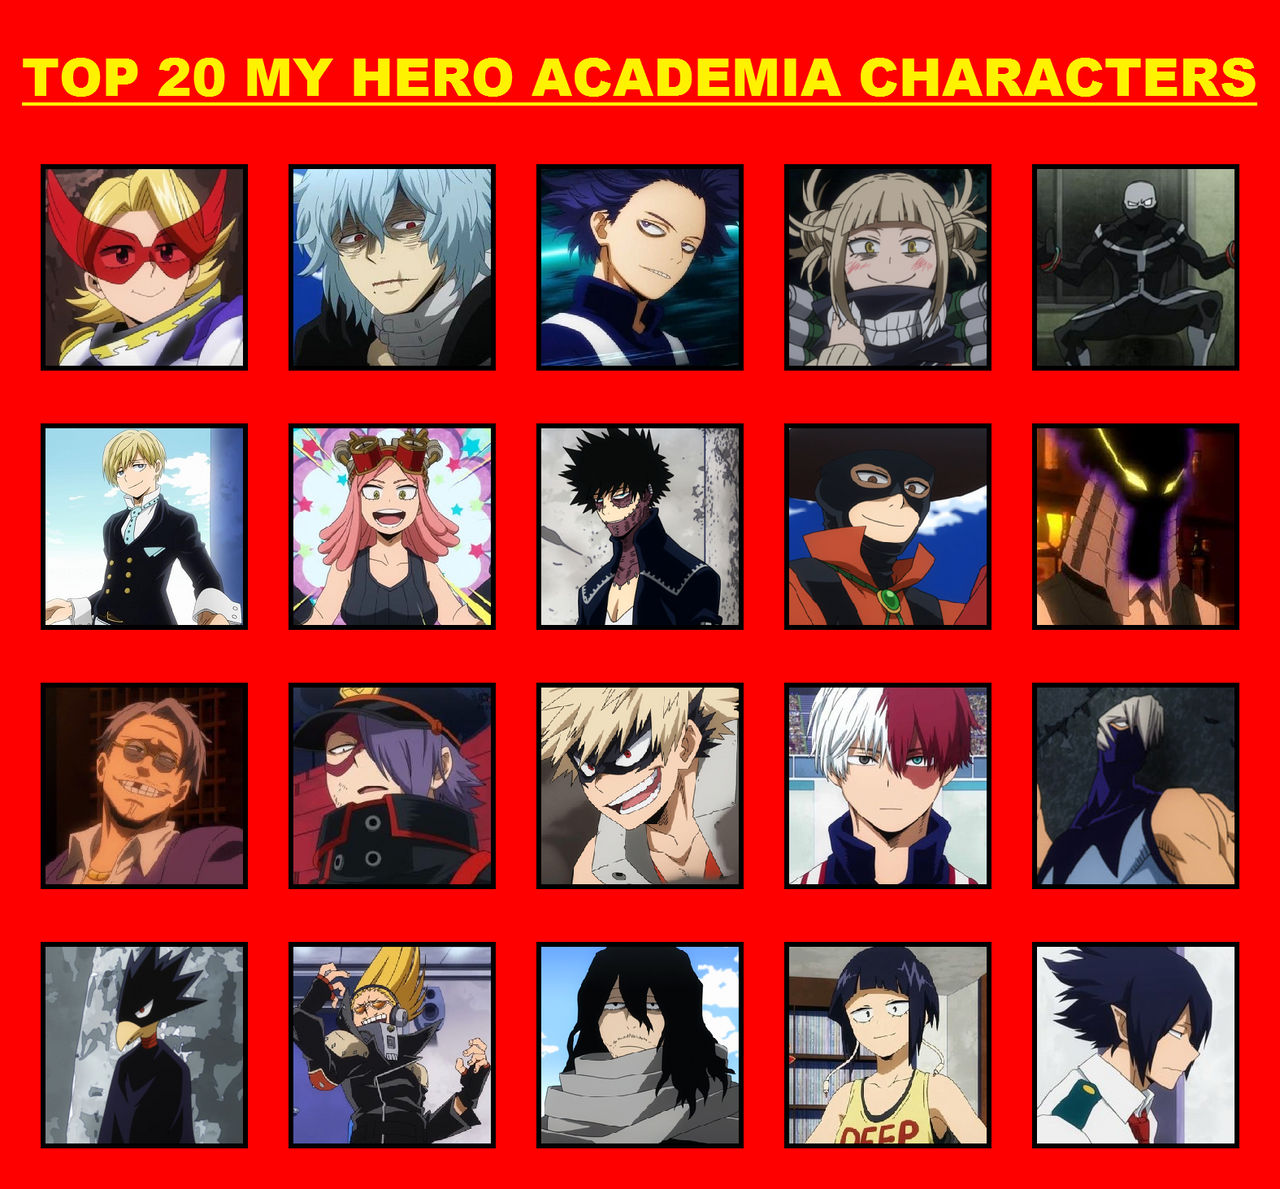 The 20 Most Popular My Hero Academia Characters, According To MyAnimeList